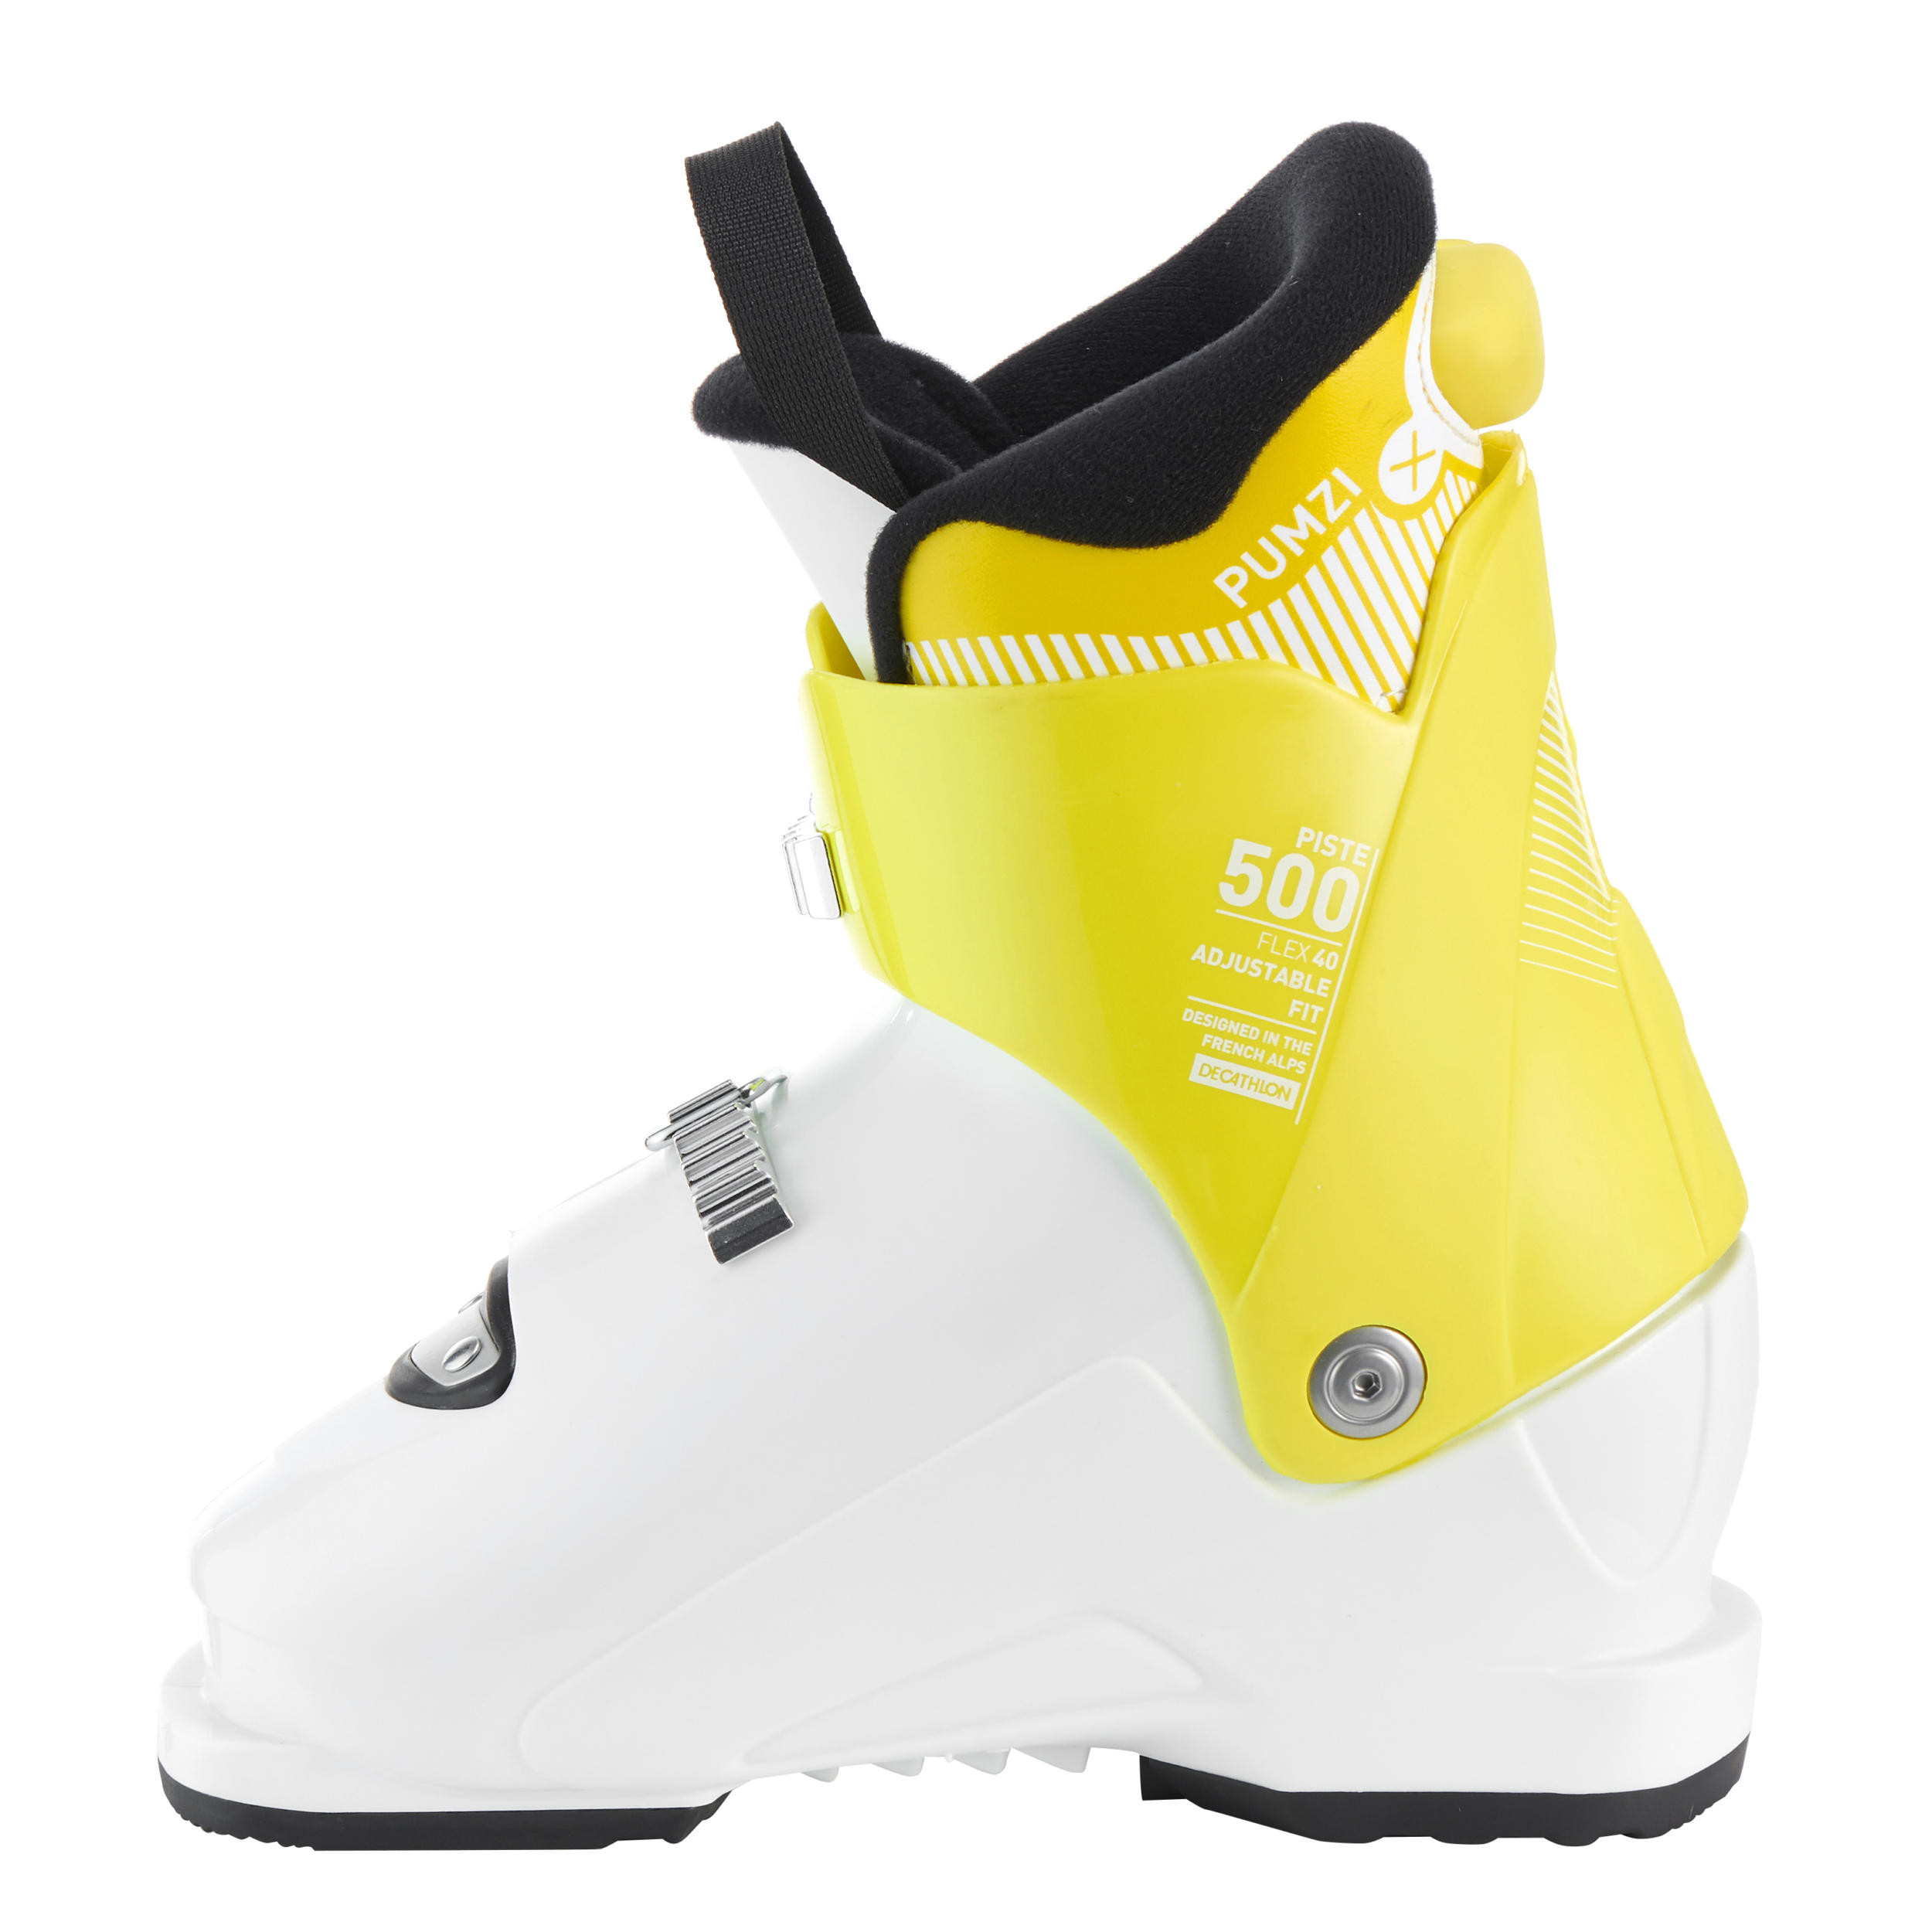 Imagini Oficiale Pentru Intreaga Familie Ultima Moda Decathlon Chaussure Ski Enfant 101openstories Org